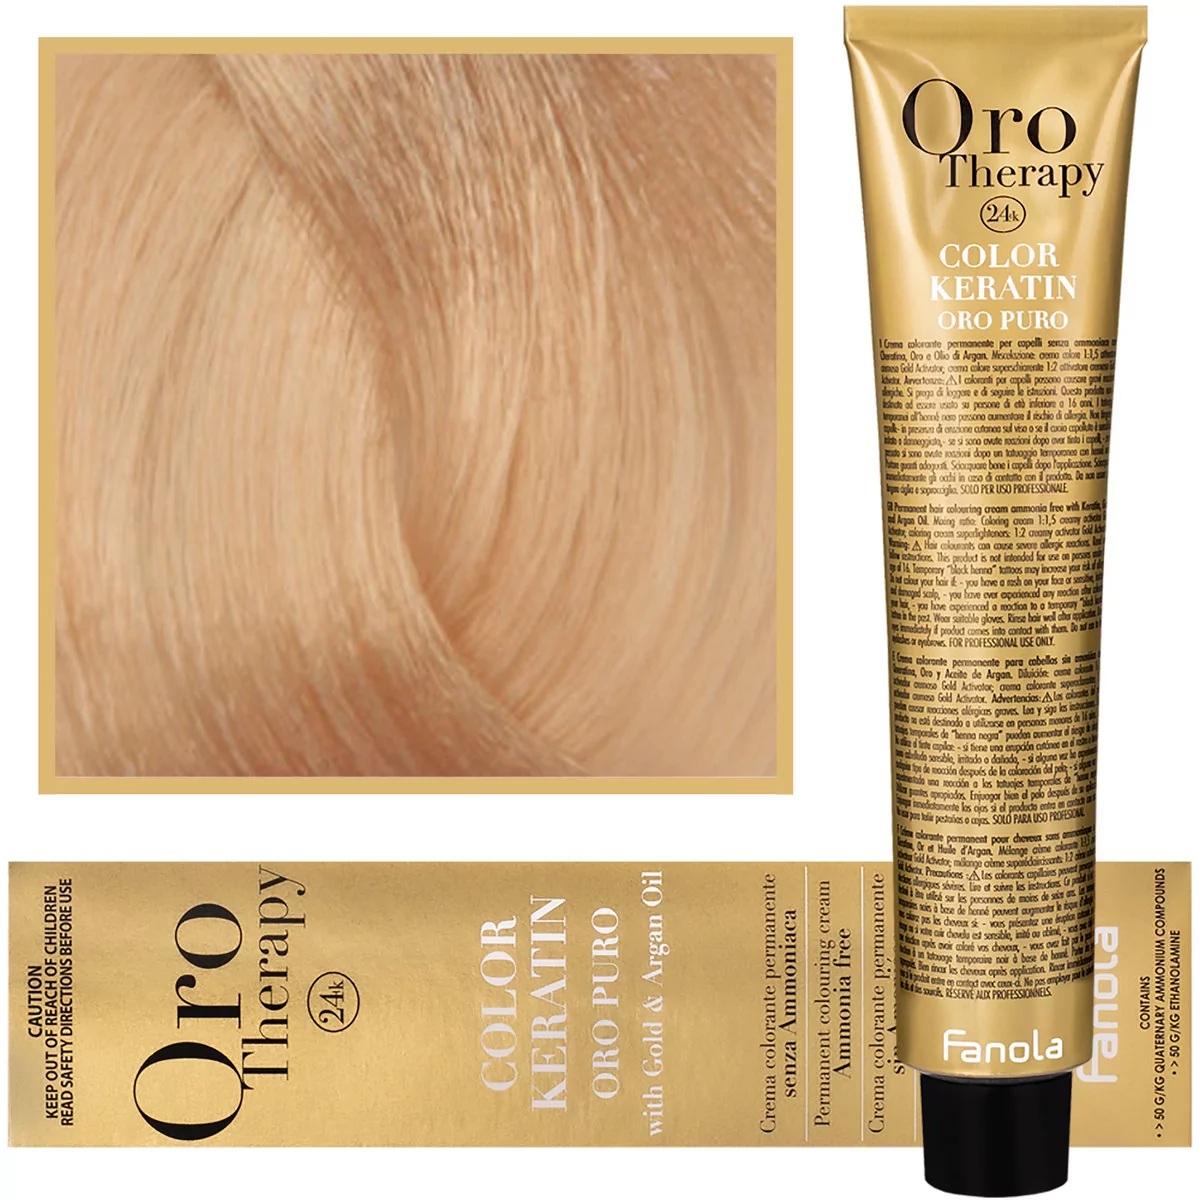 Fanola 9.31 Oro Puro Therapy Keratin Color 100 ML bardzo jasny blond Sand HC-18-40